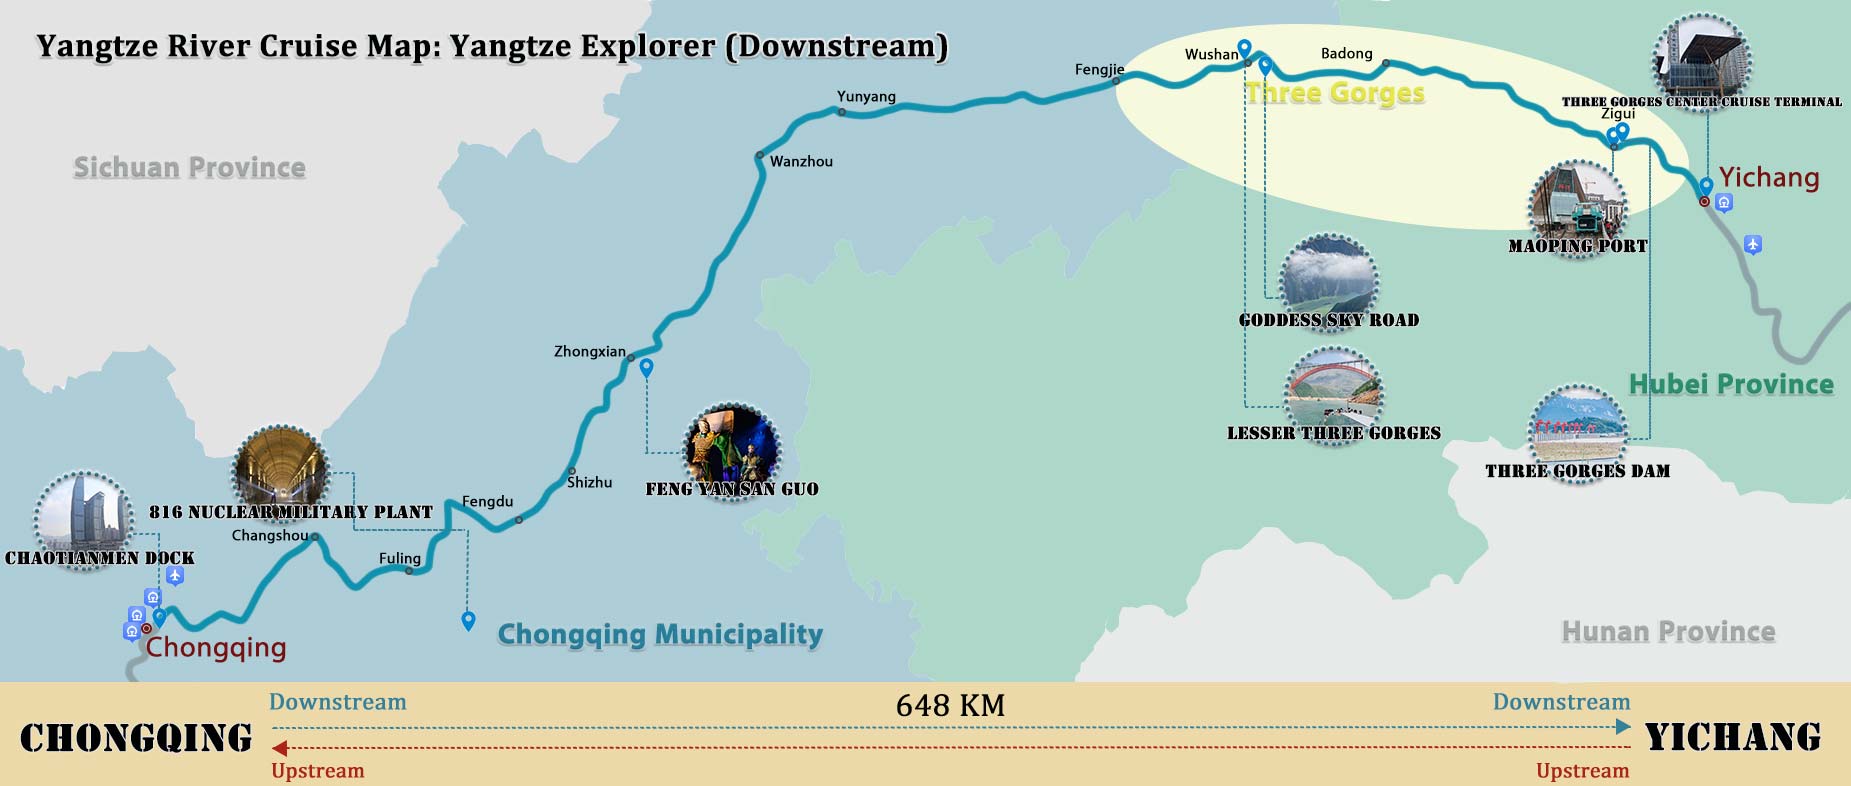 Yangtze Explorer Cruise Itinerary Map